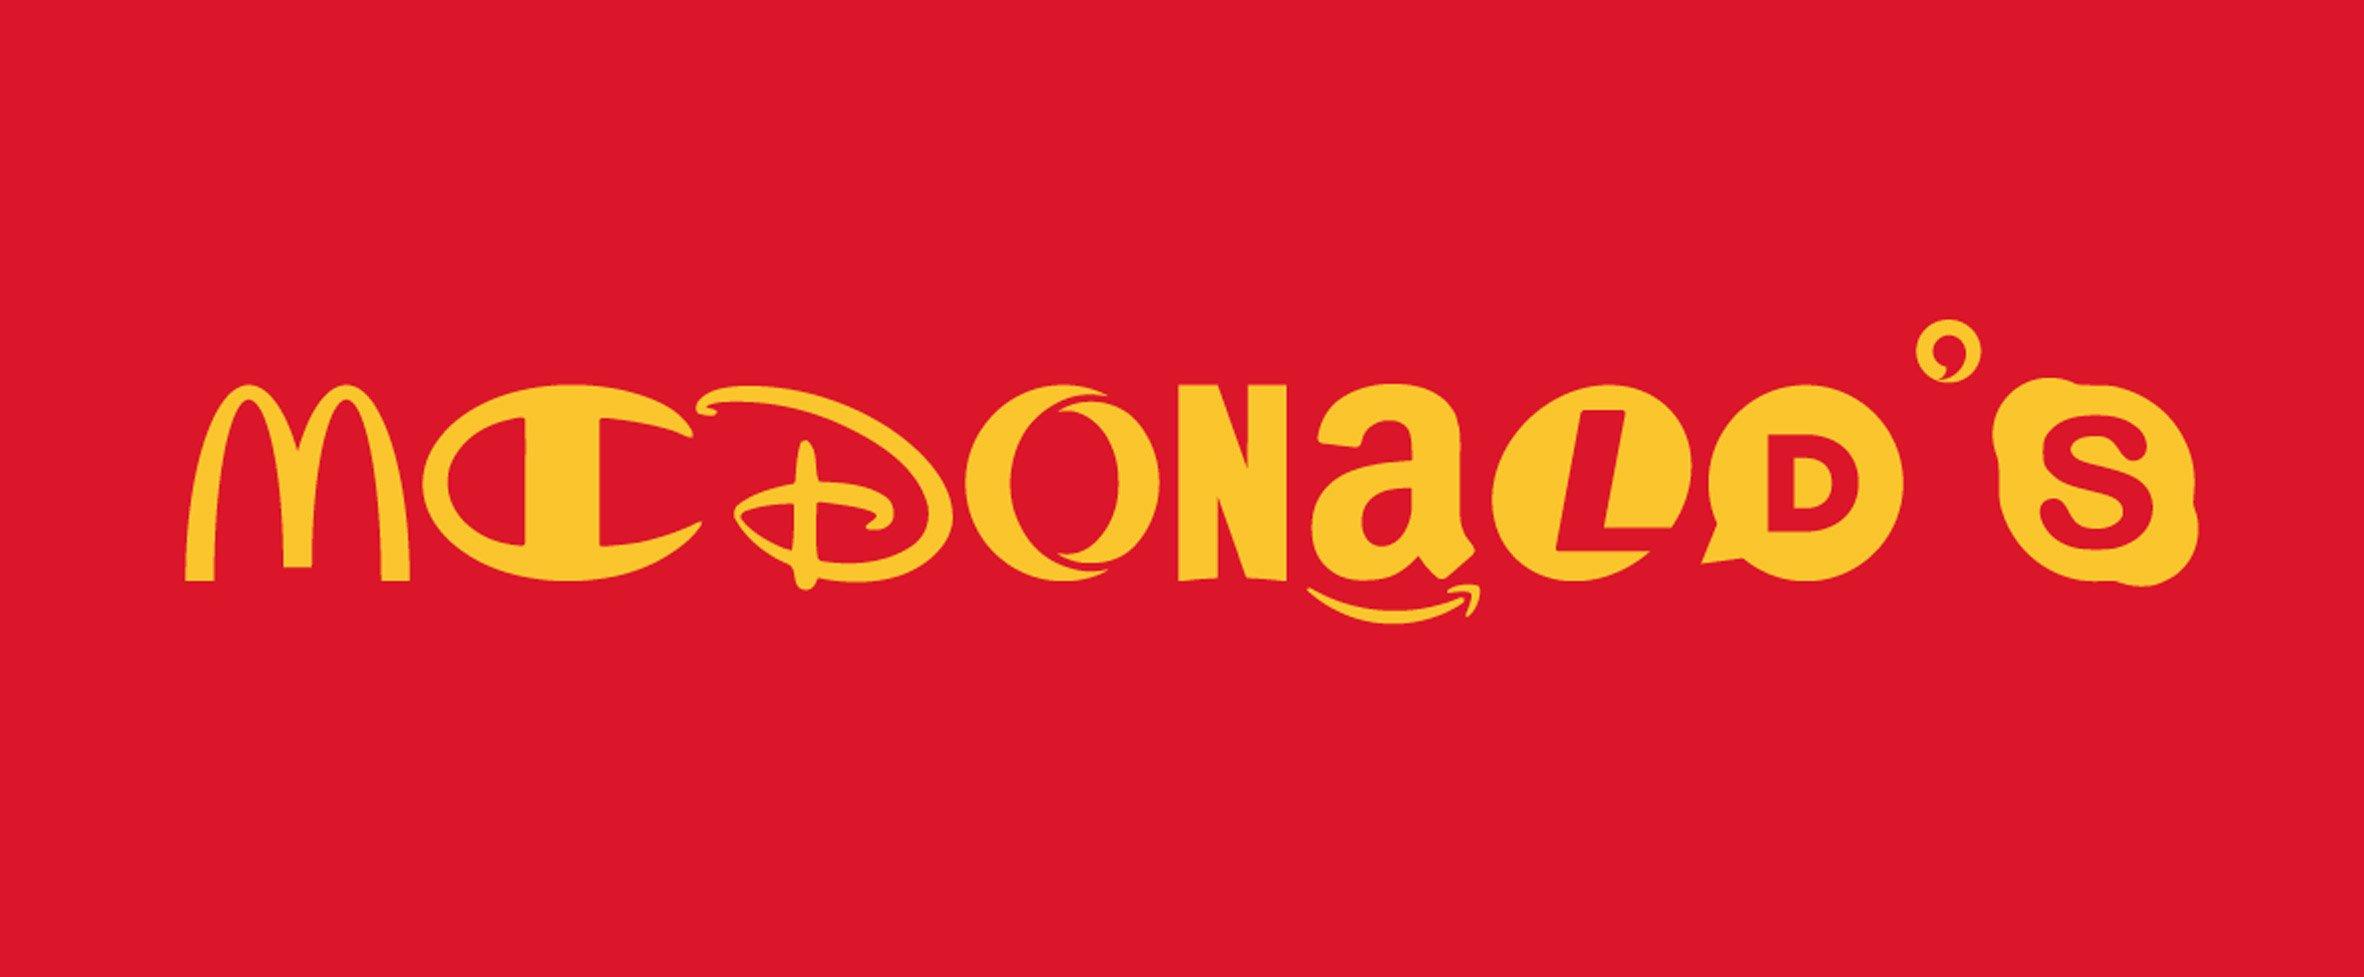 Brand New Roman Font Logo McDonald's